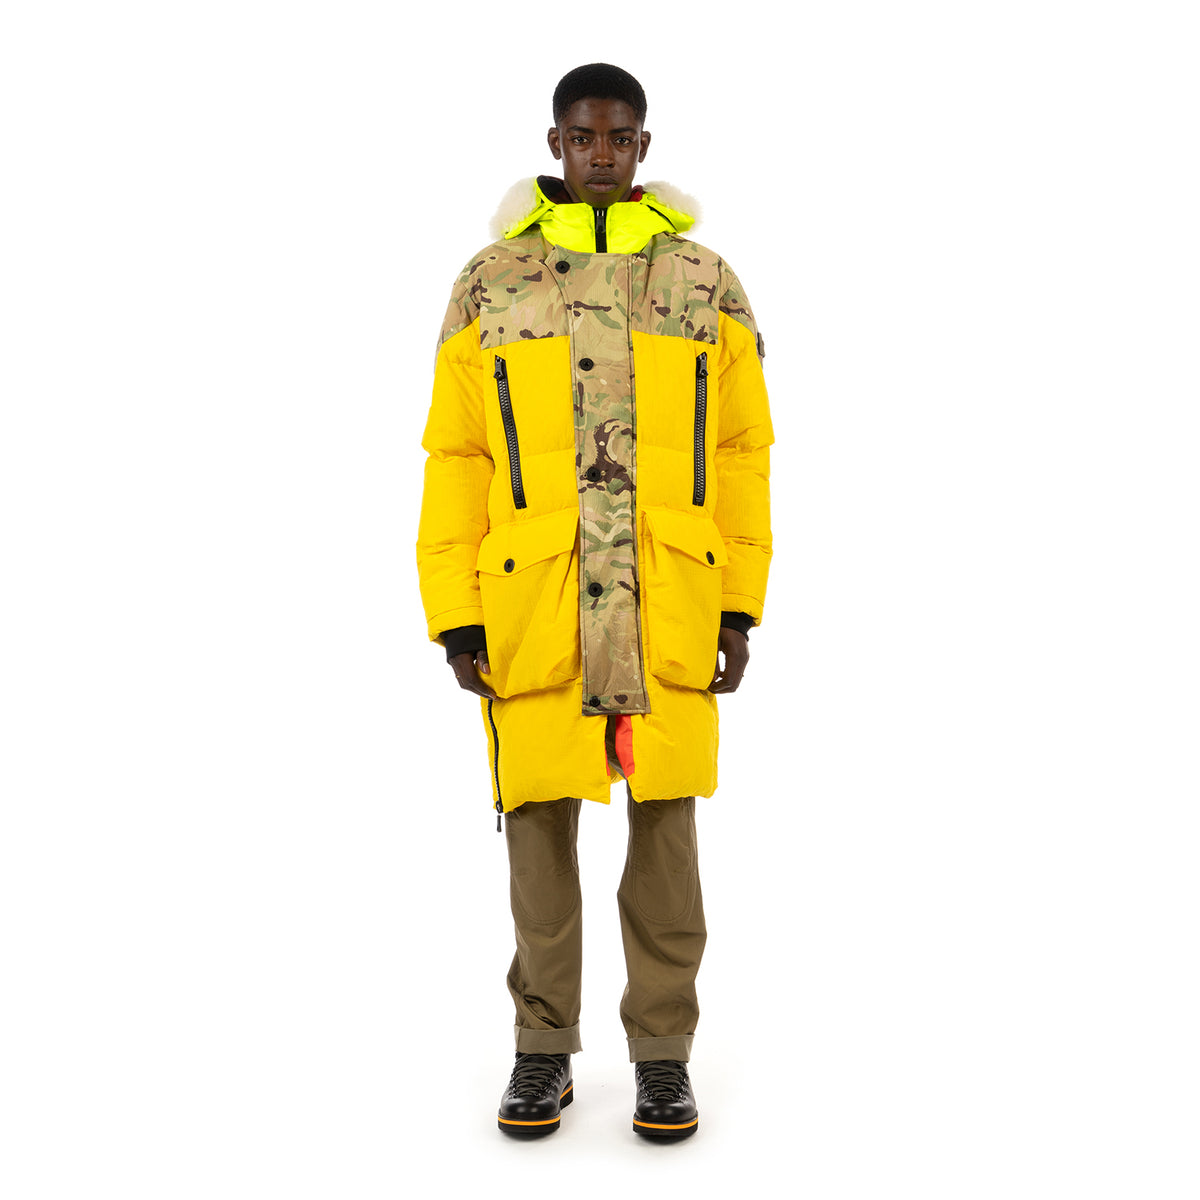 Griffin | Sleeping Bag Coat Snow Yellow / Winter Camo - Concrete